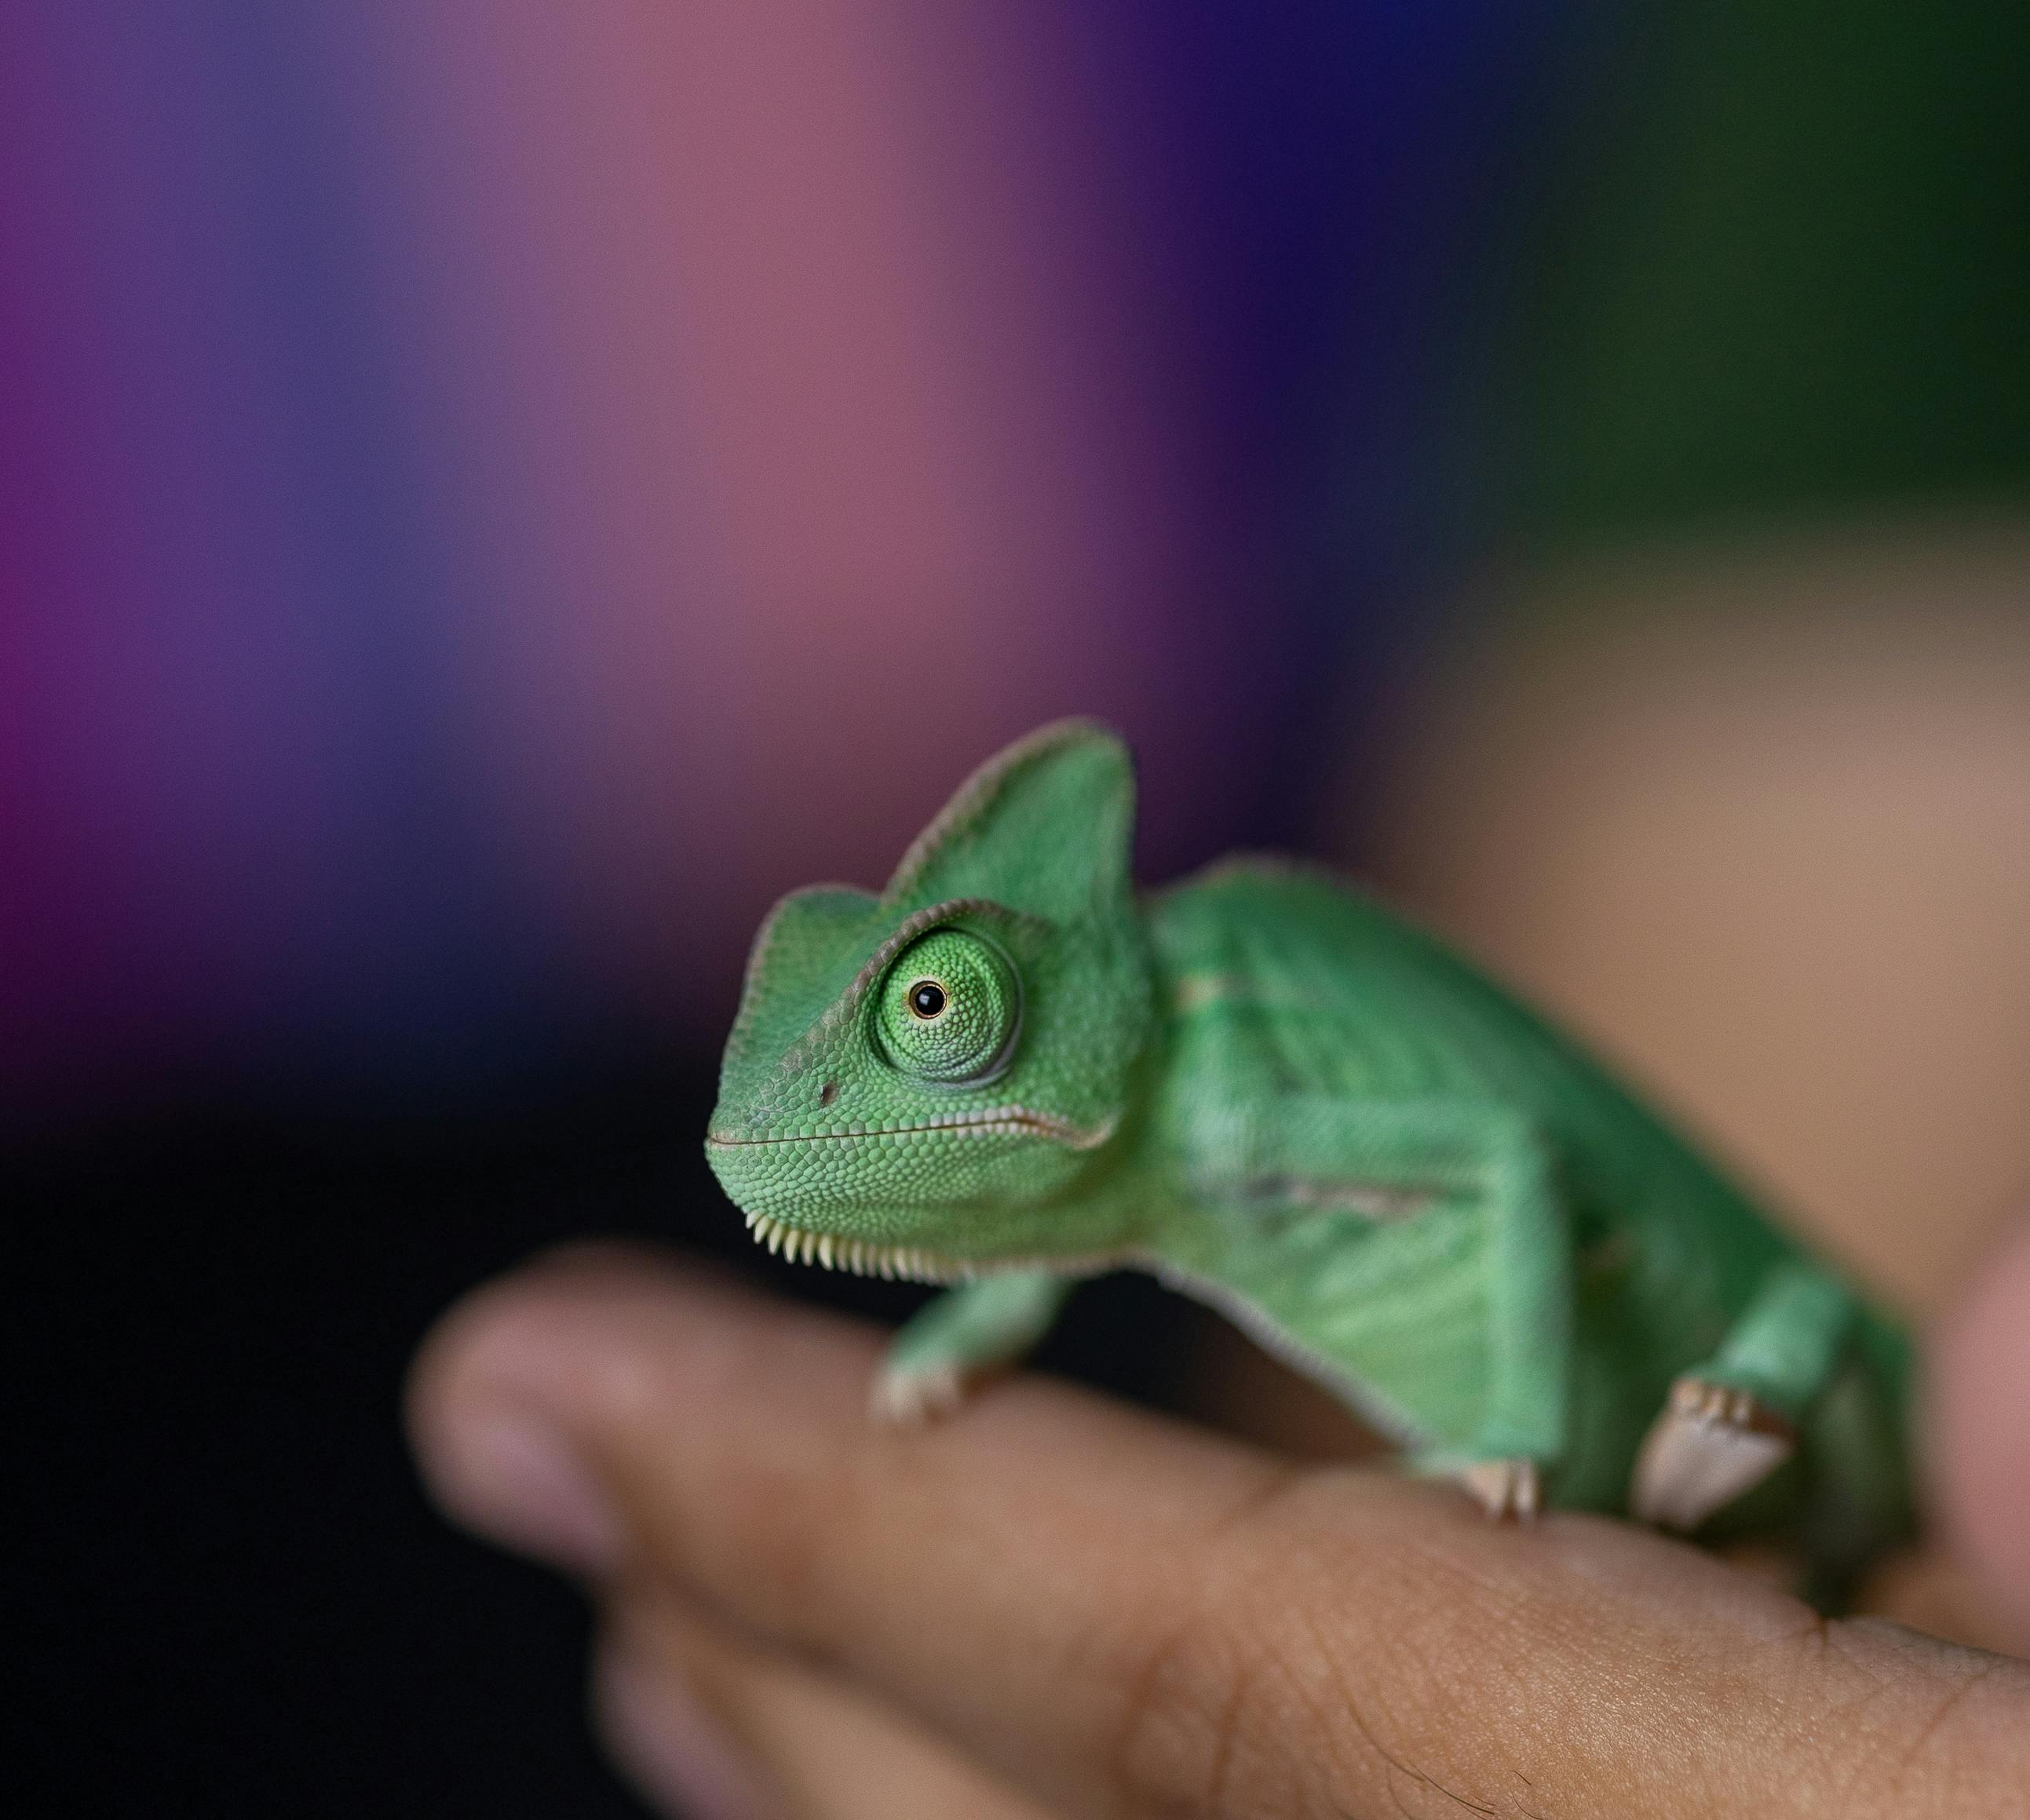 cute baby chameleon